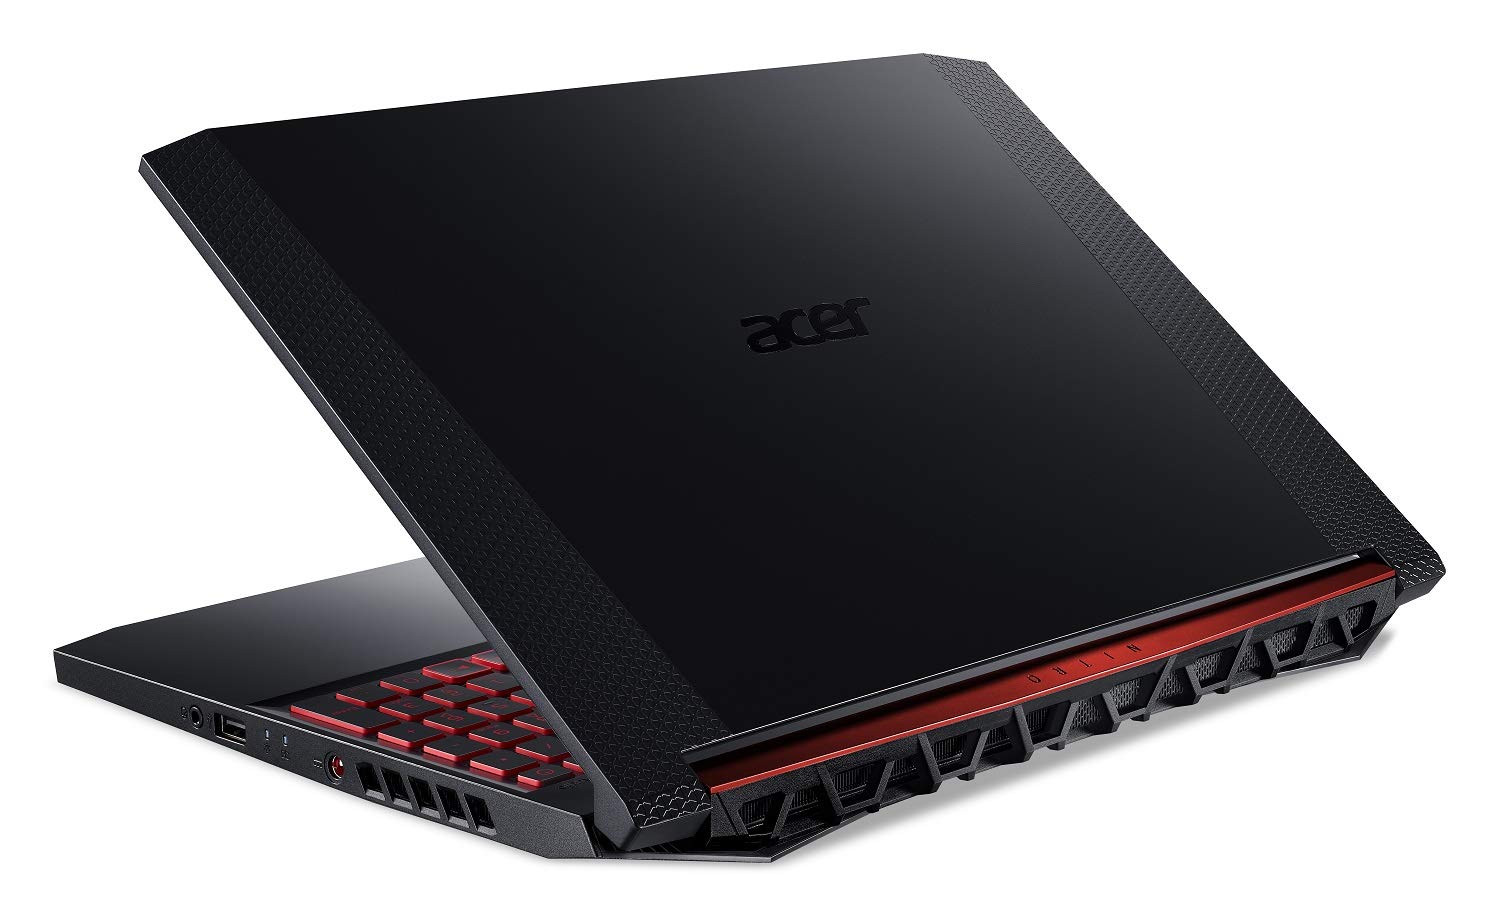 Acer Nitro 5 Gaming Laptop, 9th Gen Intel Core i5-9300H, NVIDIA GeForce GTX 1650, 15.6